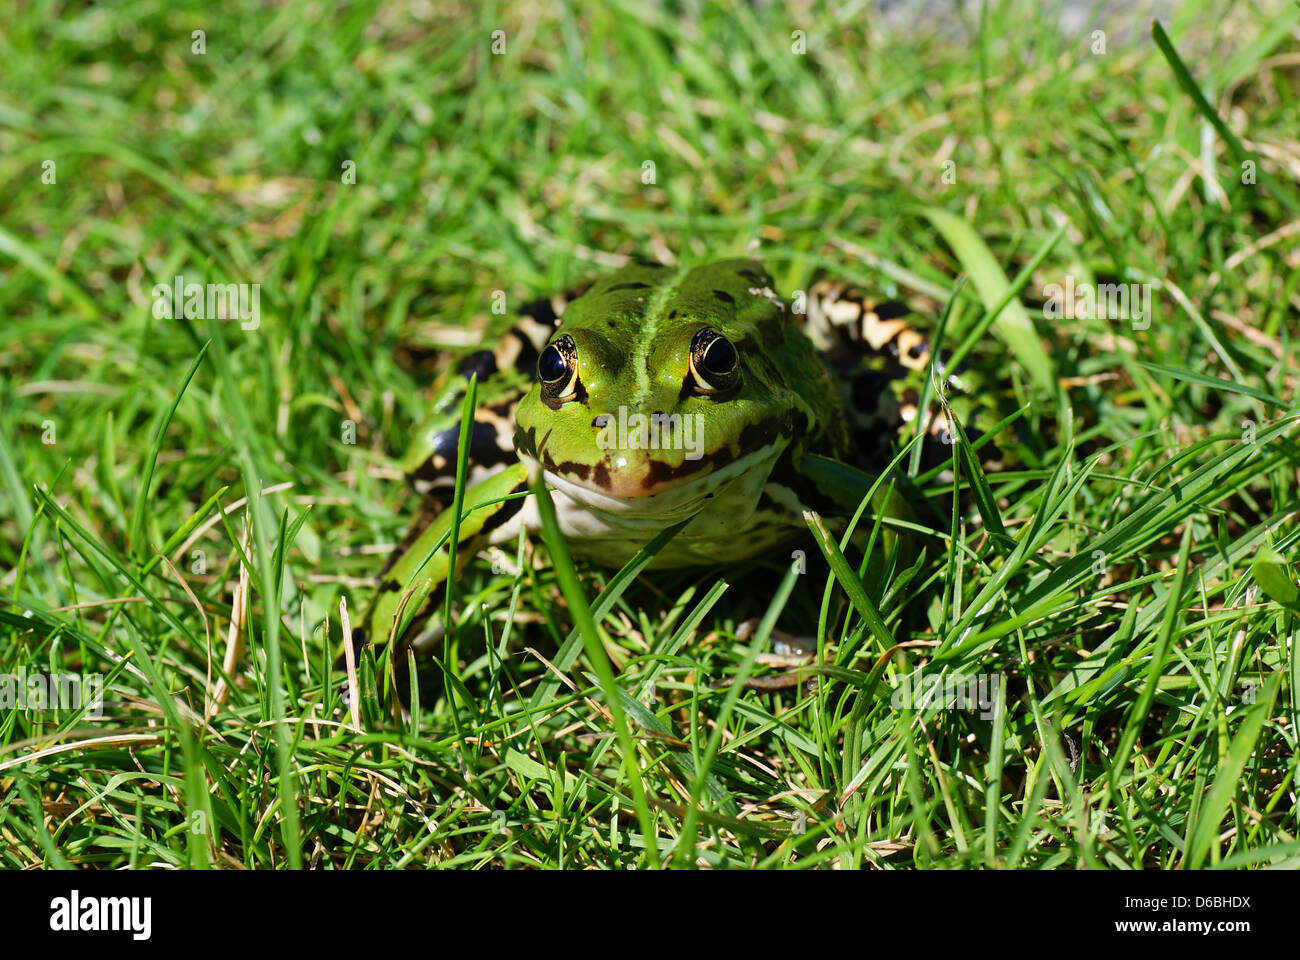 Grande rana verde seduto sull'erba Foto Stock